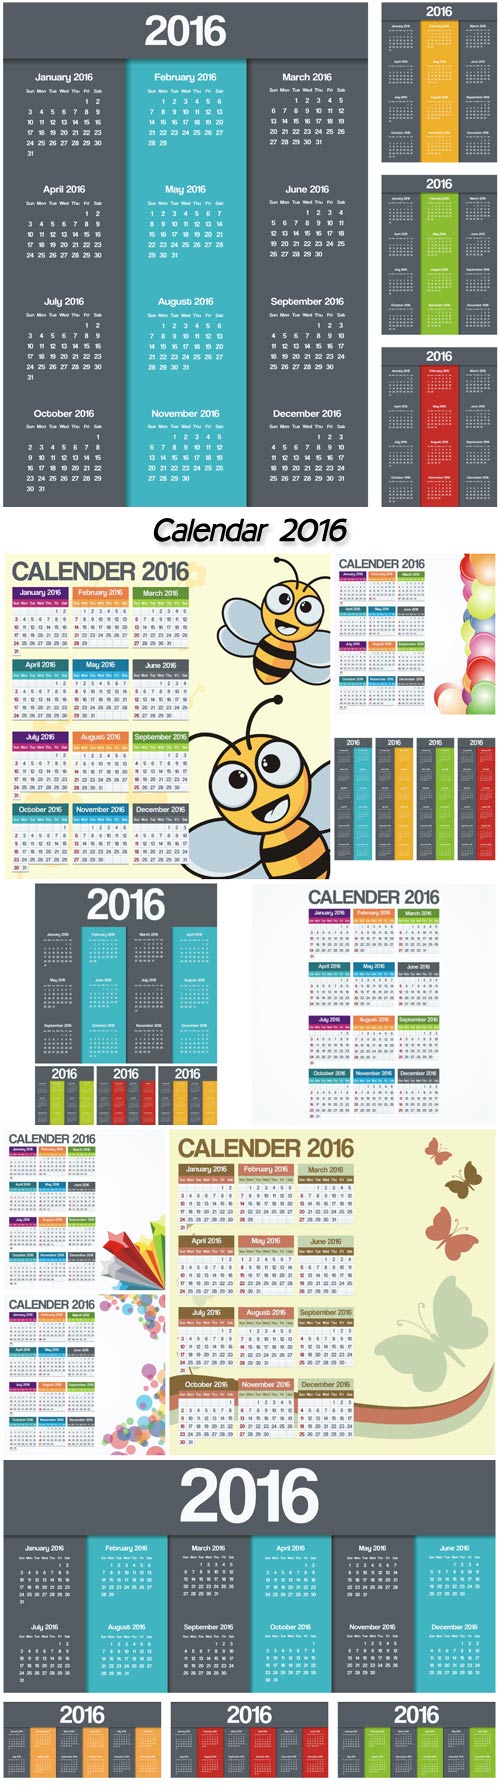 Calendar 2016, new year